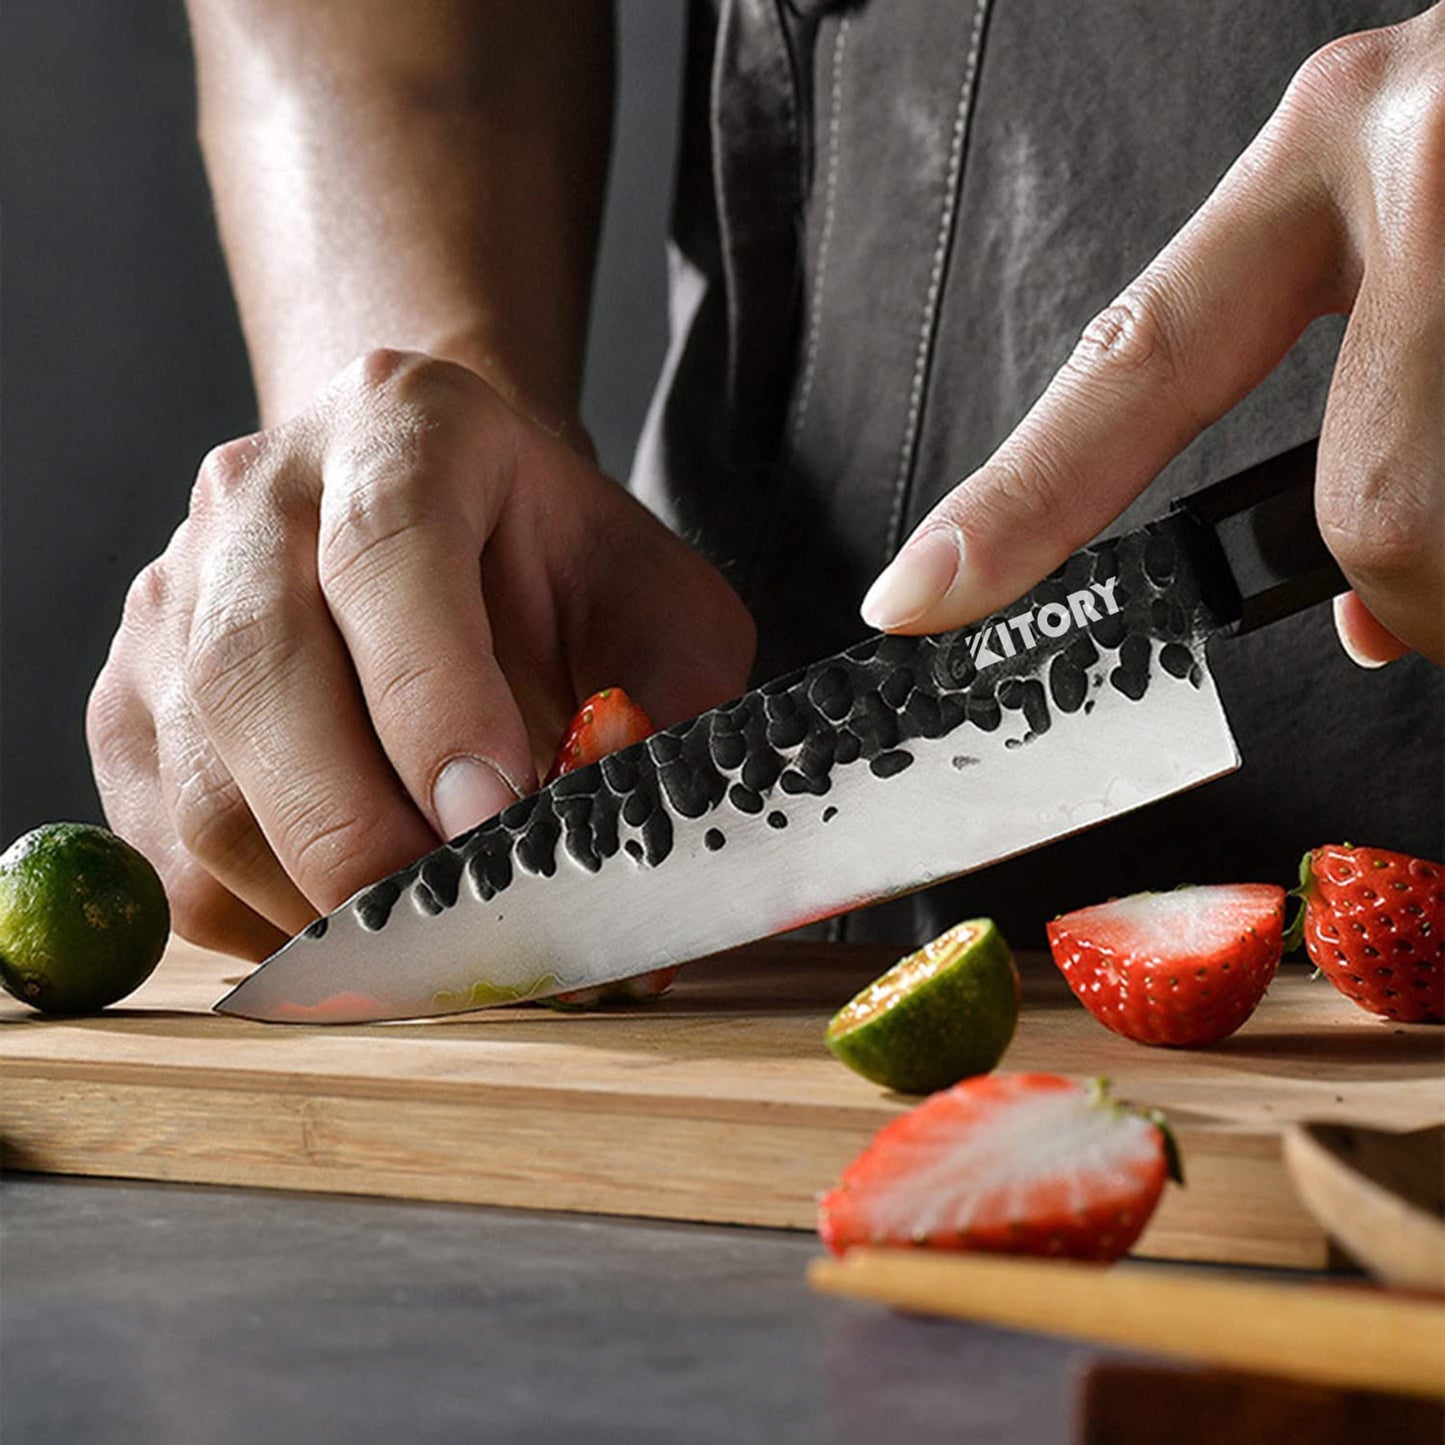  FAMCÜTE Japanese Chef Knife Set, 3 Layer 9CR18MOV Clad Steel  w/octagon Handle and Block Wooden Holder for 4Piece Kitchen Knife Set (8”  Gyuto Knife, 7” Nakiri Knife, 7” Santoku knife, 5”